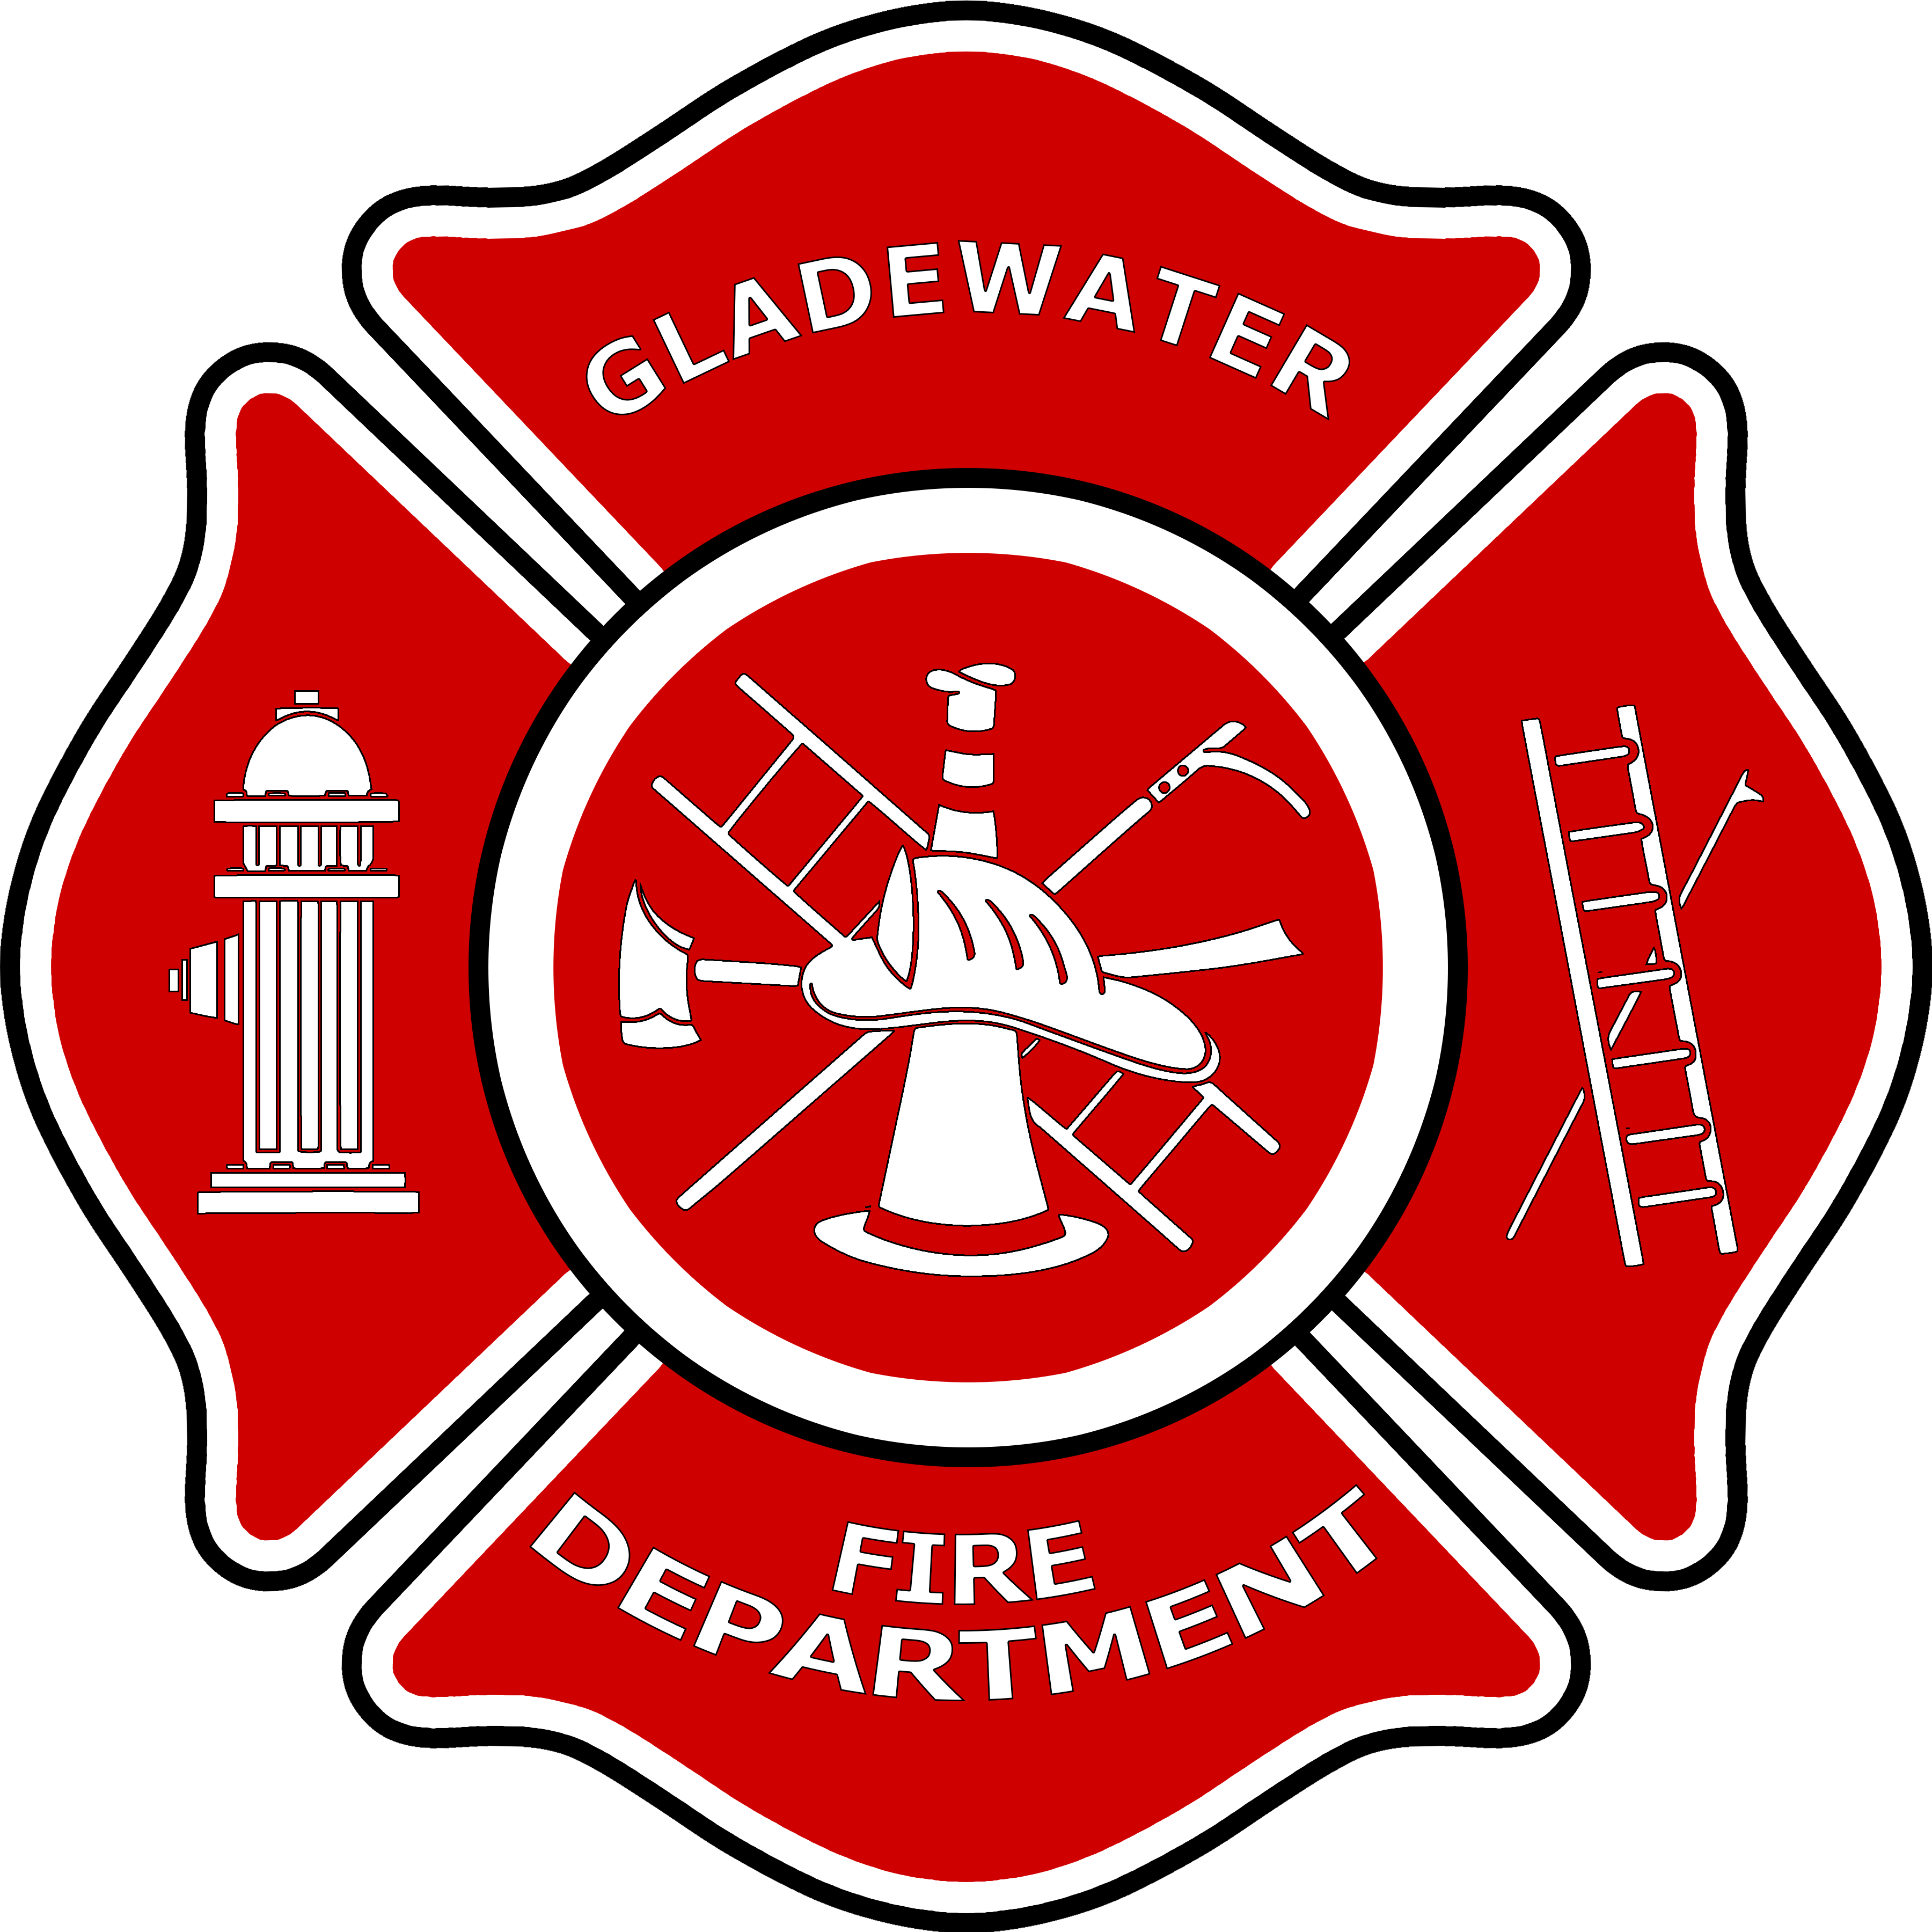 fire-department-logo-blank-gladewater-fire-department